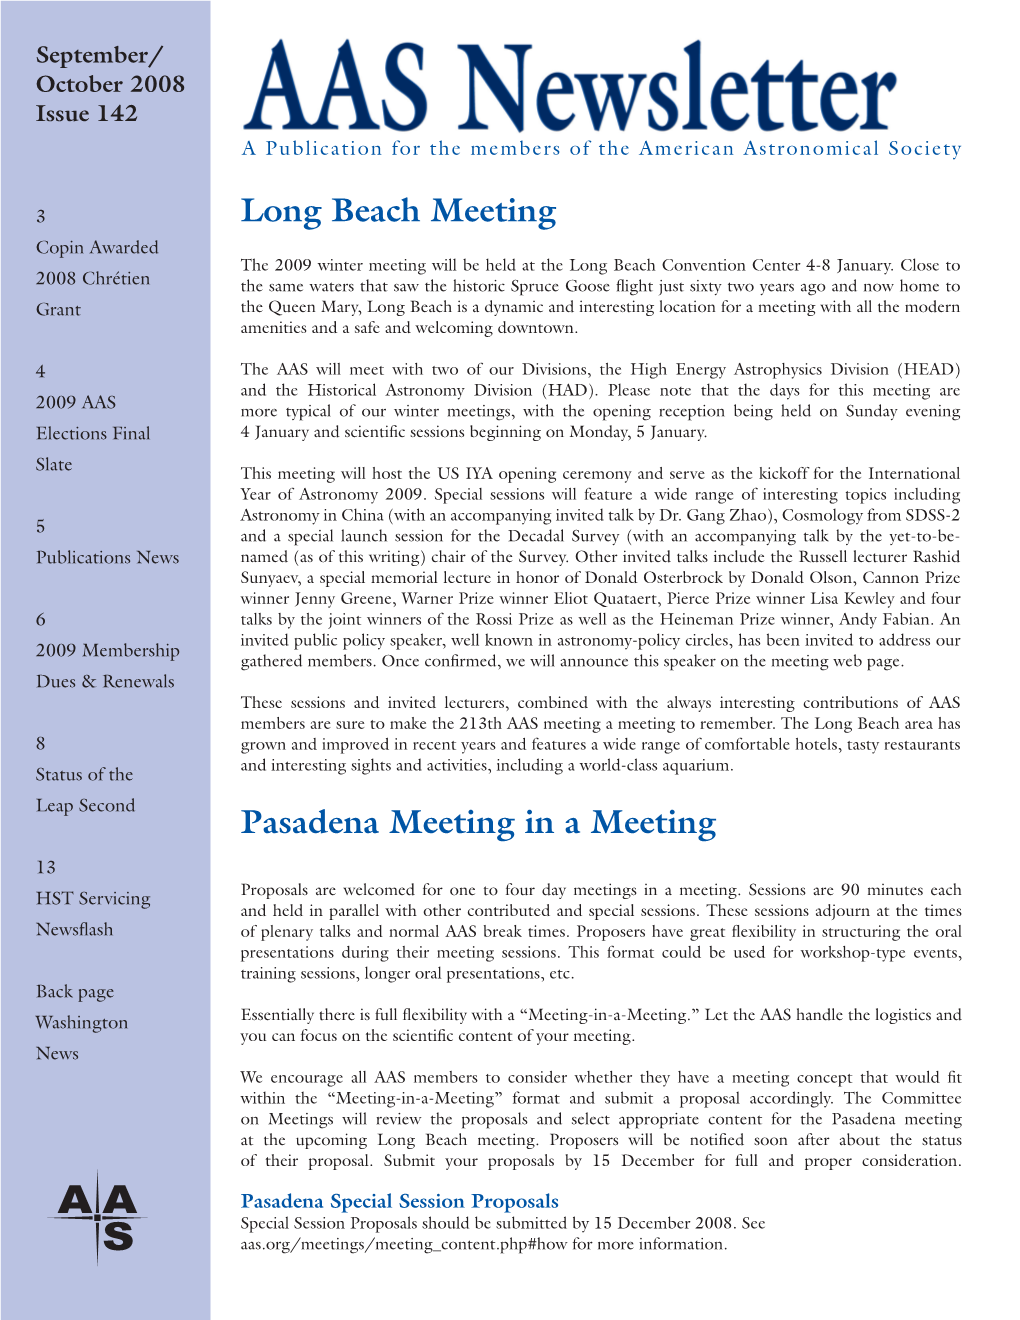 Long Beach Meeting Pasadena Meeting in a Meeting